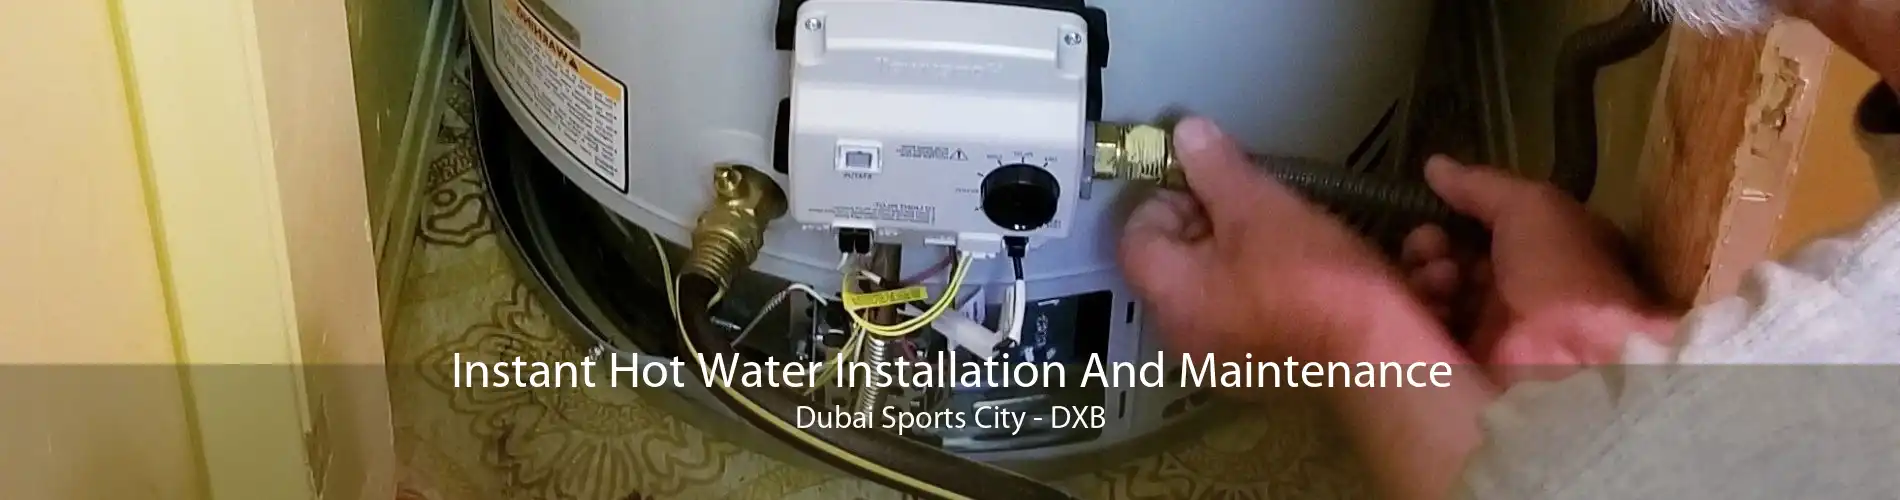 Instant Hot Water Installation And Maintenance Dubai Sports City - DXB